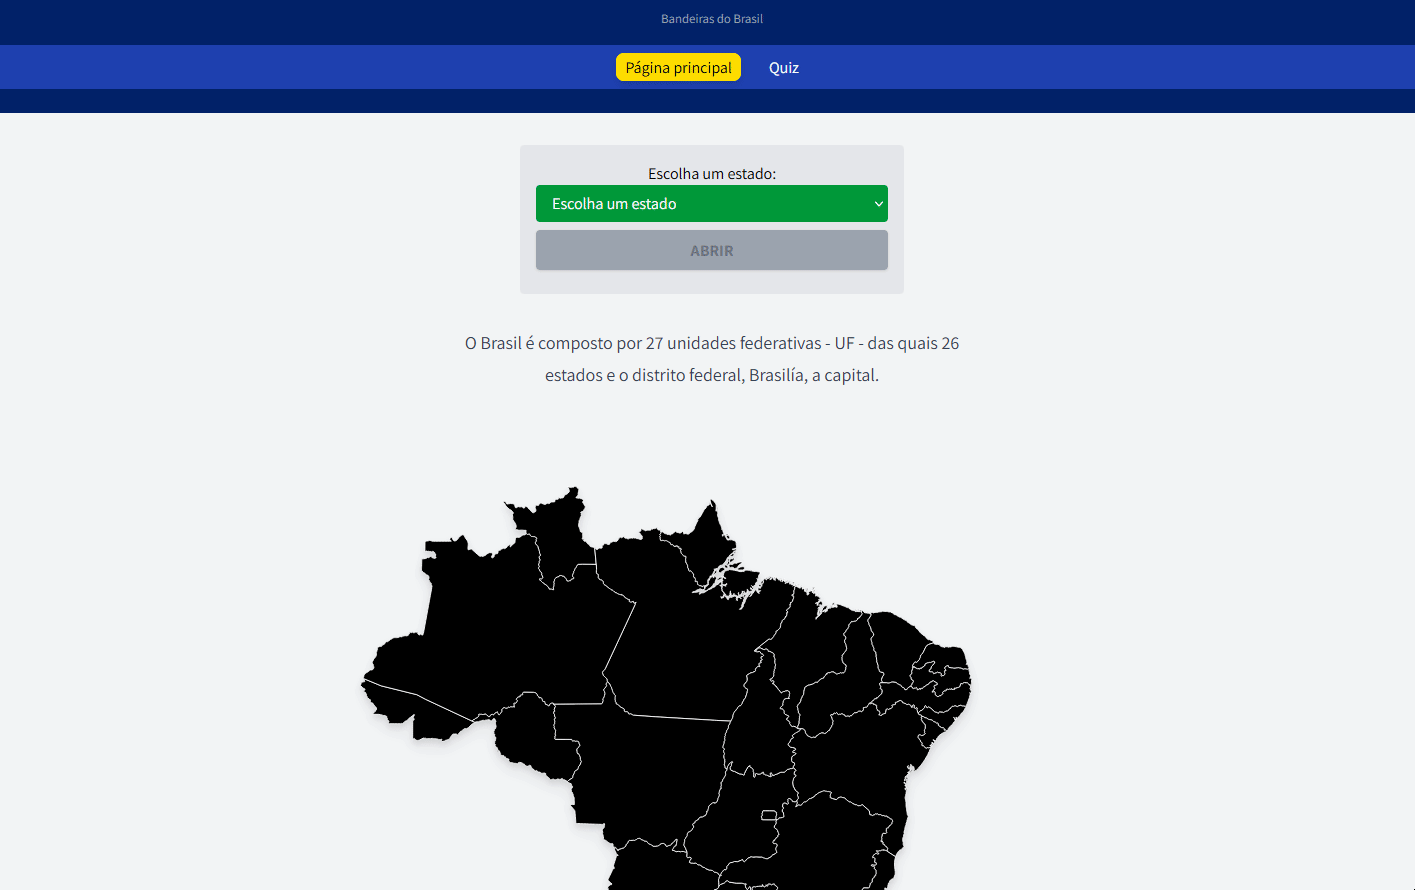 GIF: Showcasing website map of Brazil